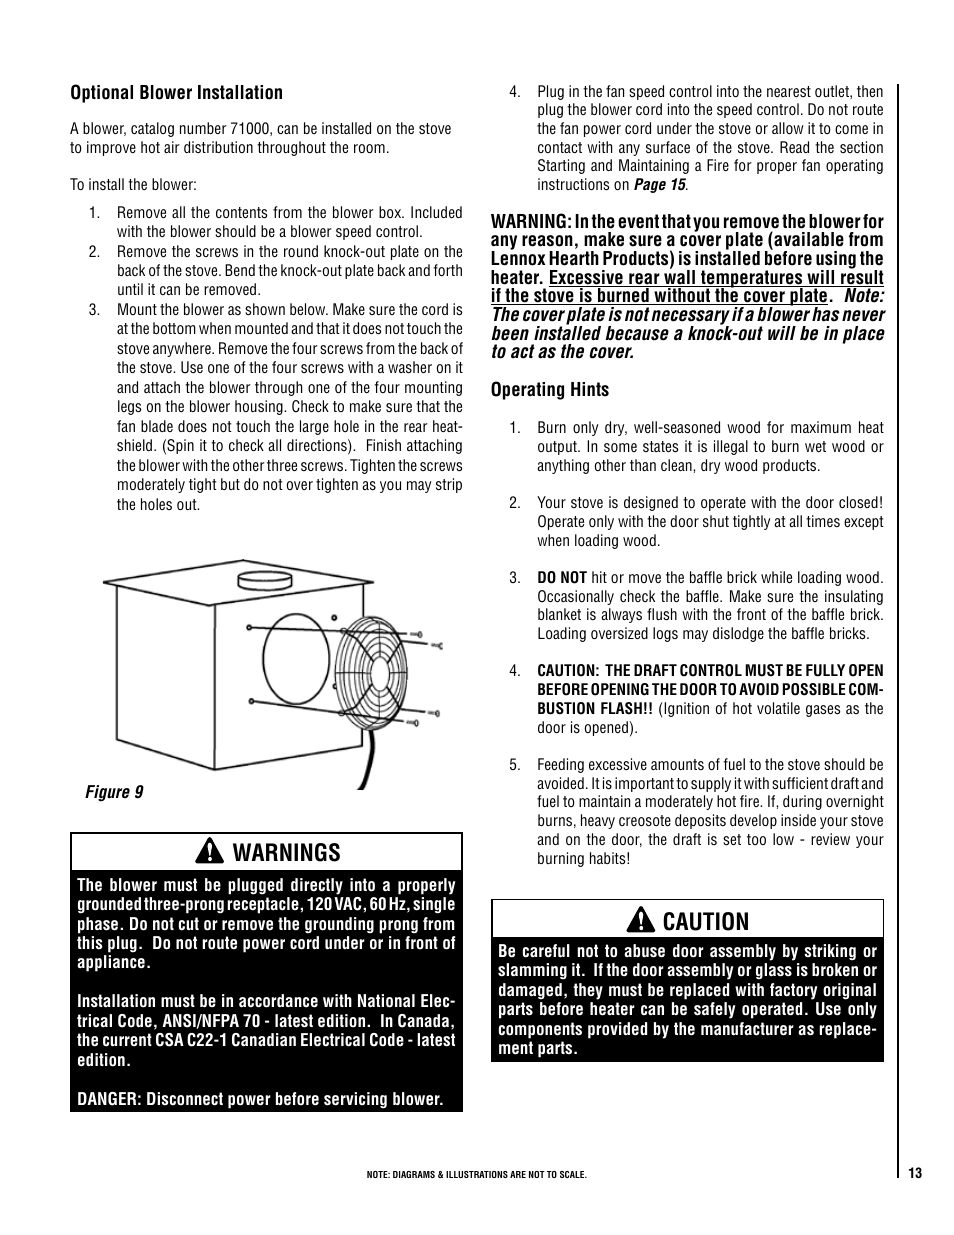 Warnings, Caution | LG MODEL STRIKER S160 User Manual | Page 13 / 22